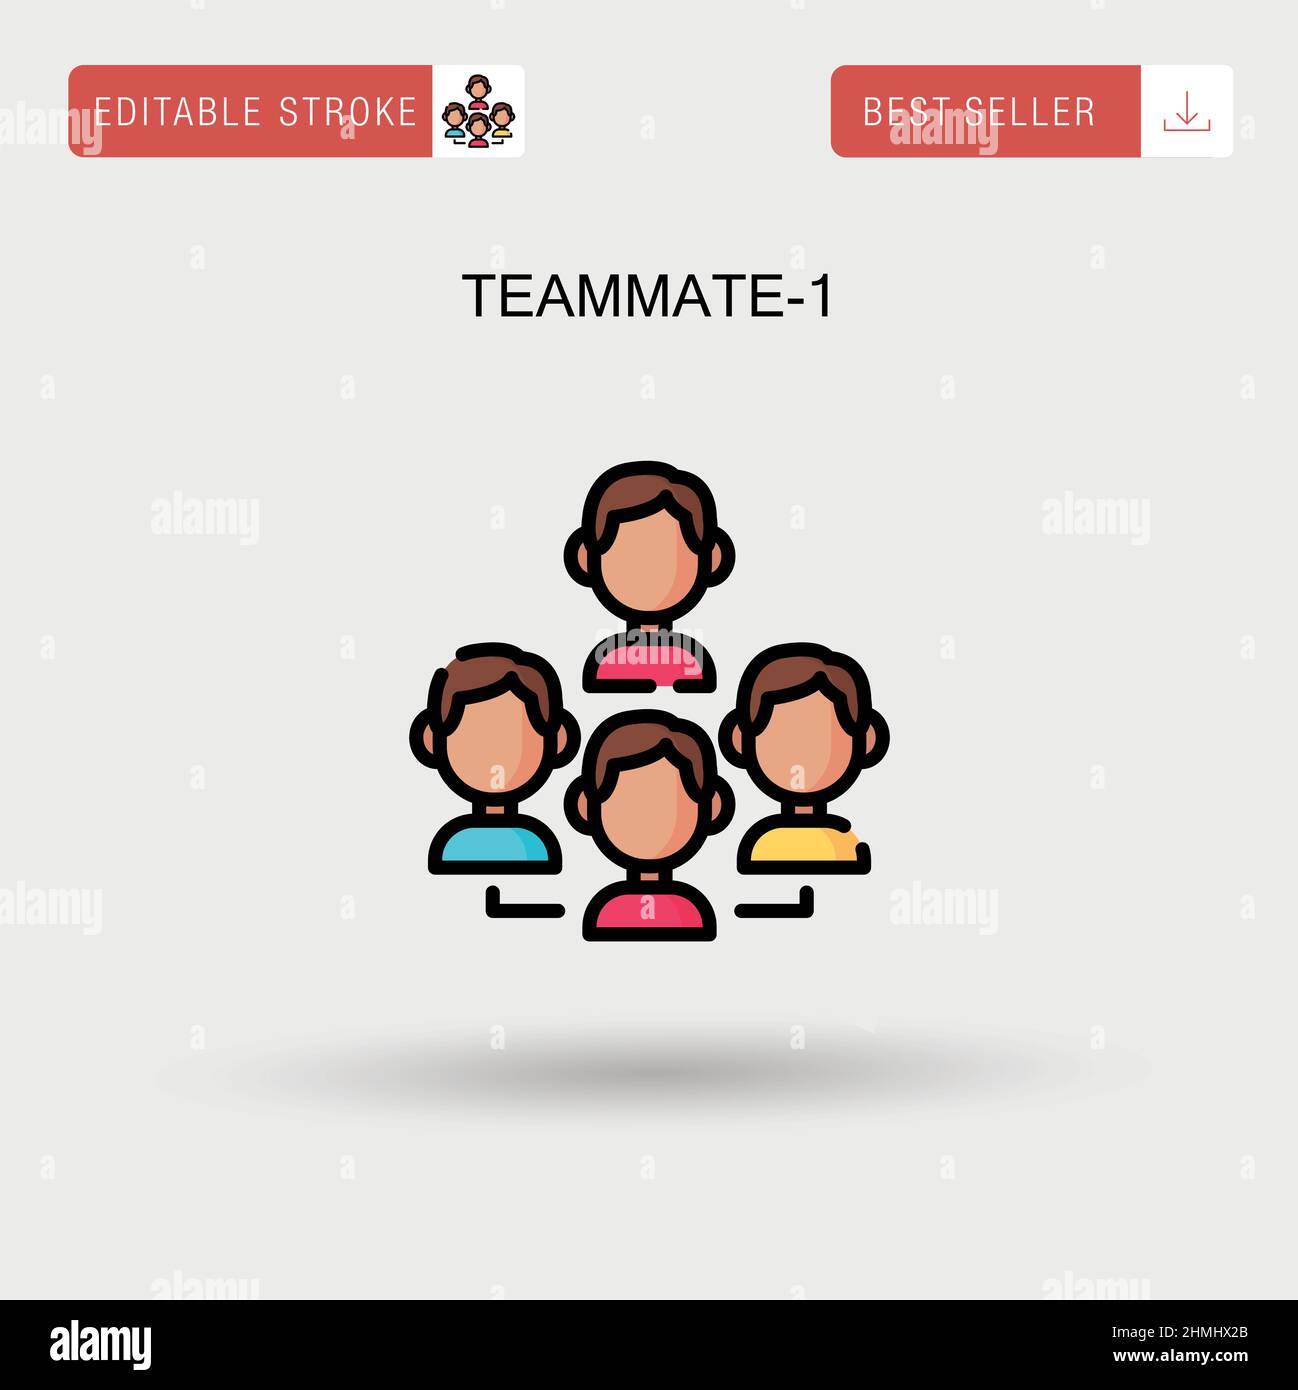 Teammate-1 Simple vector icon. Stock Vector